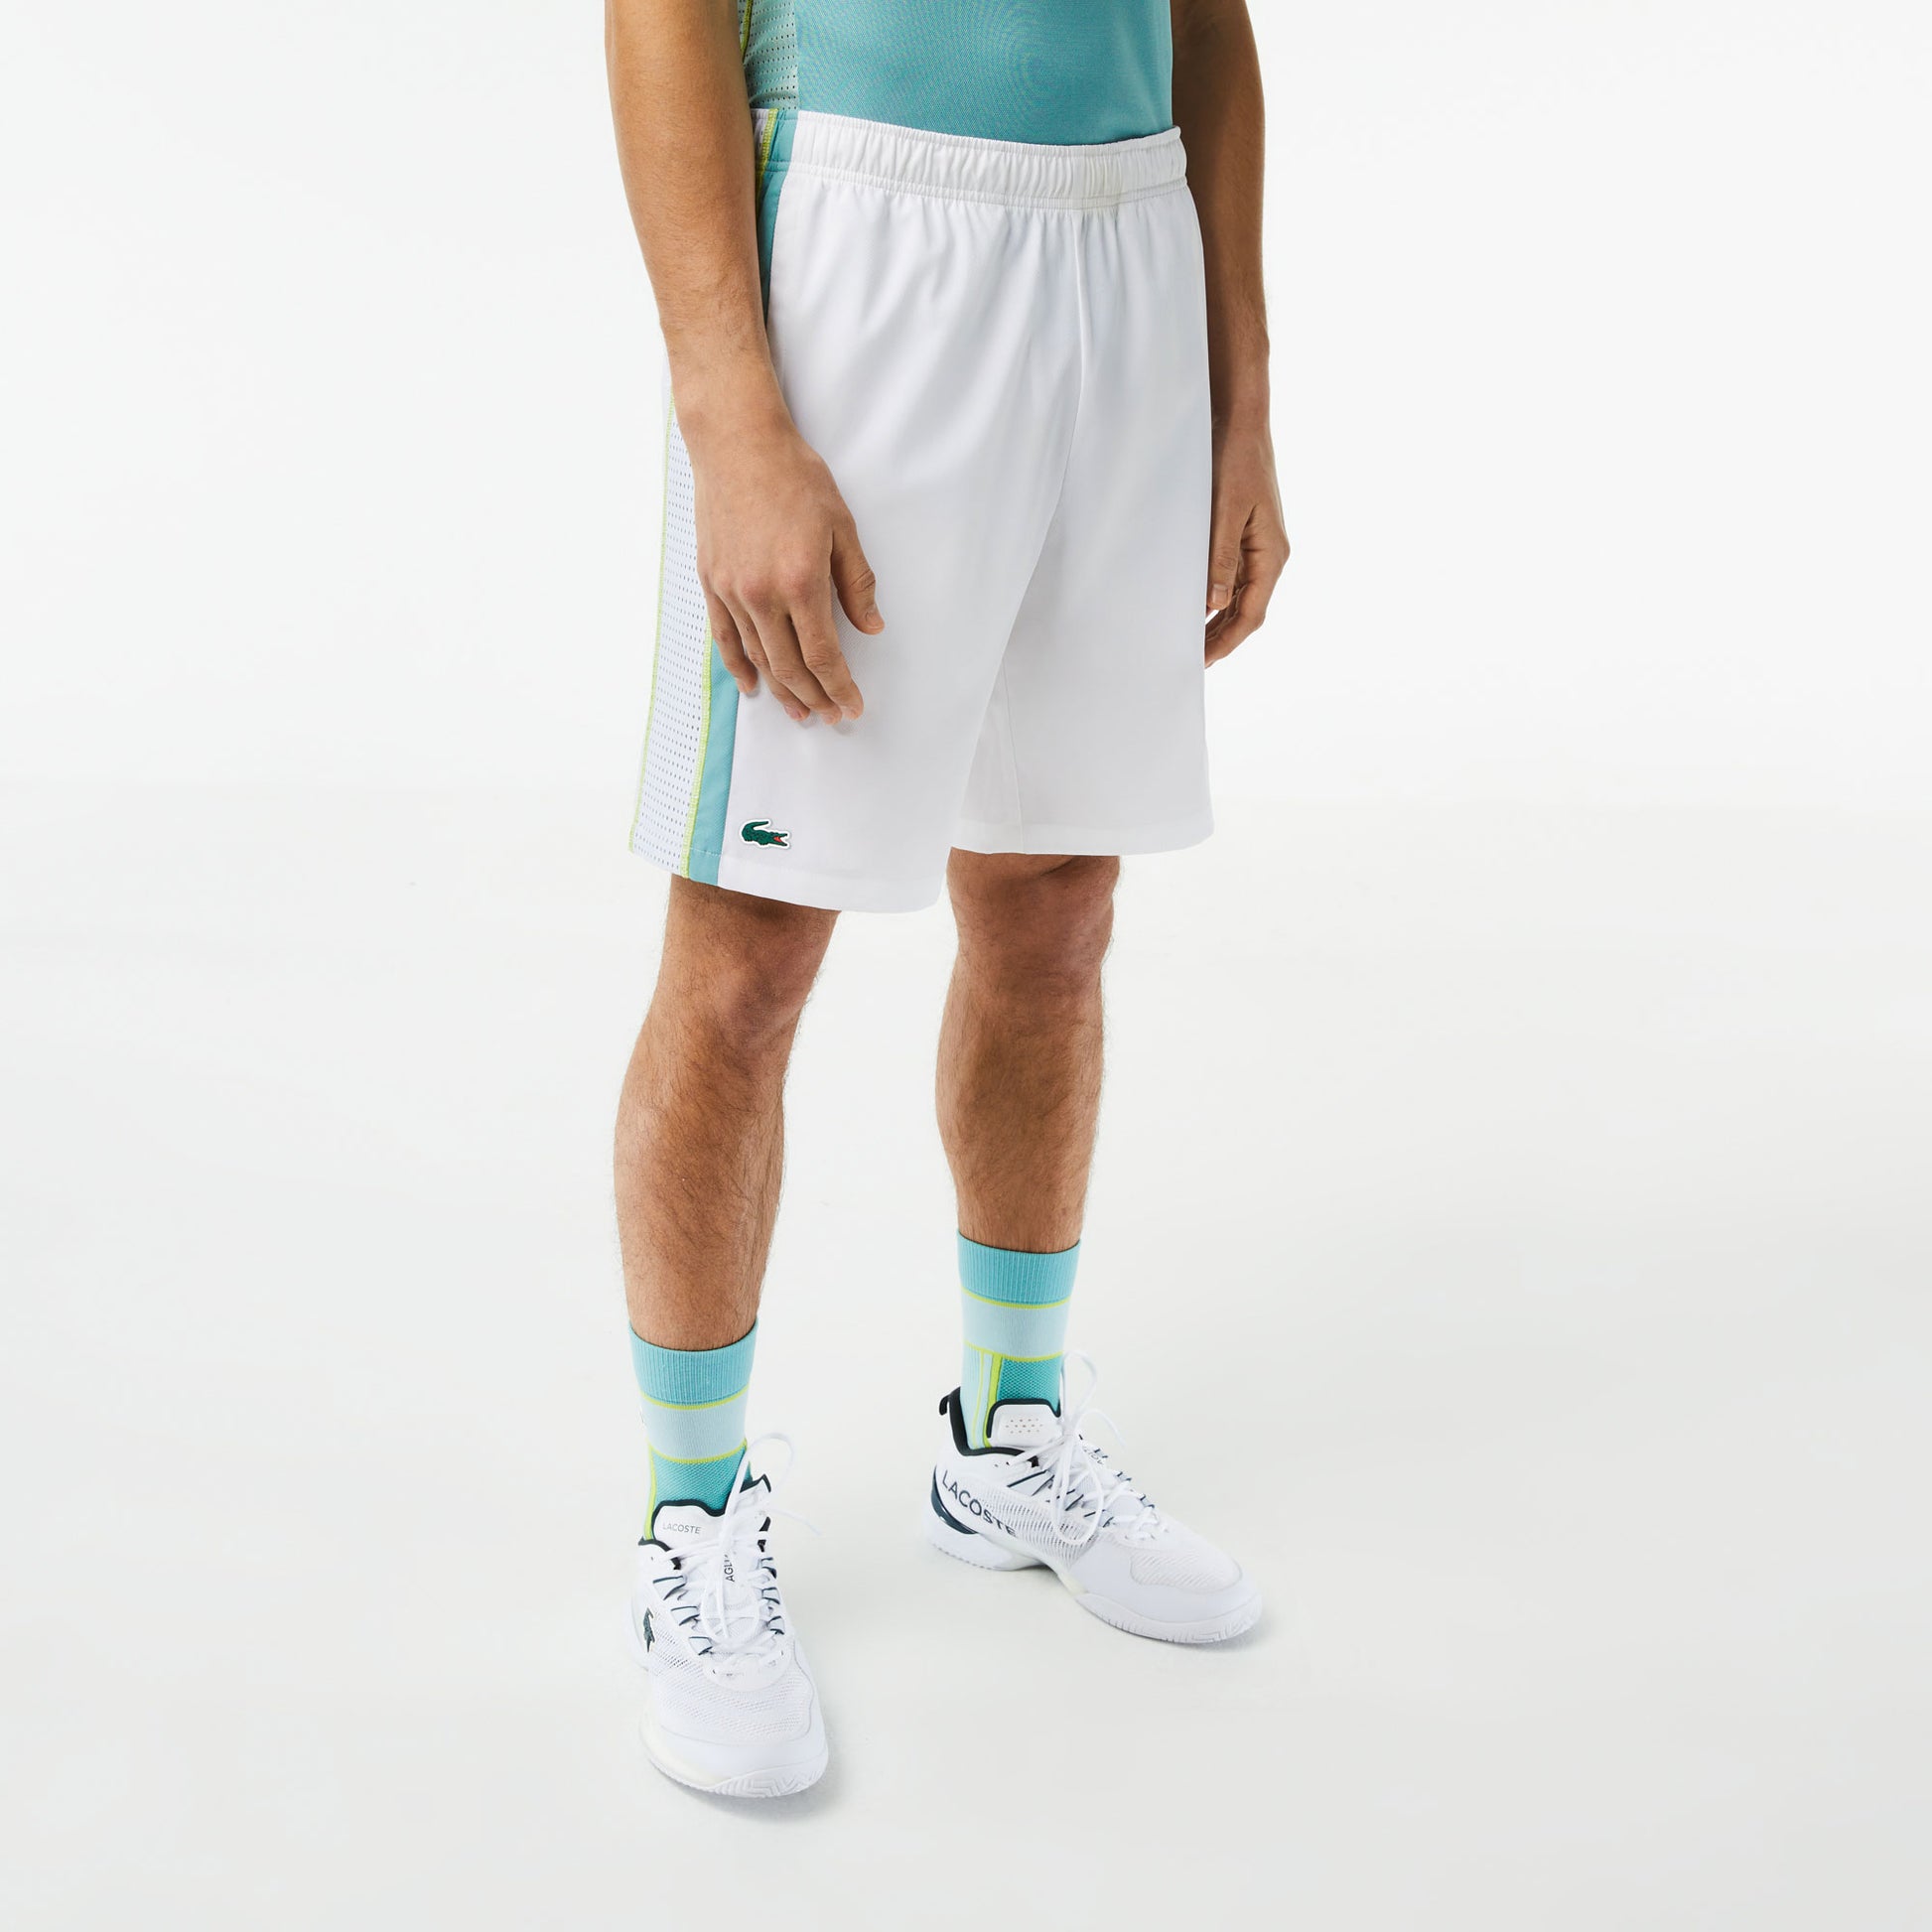 Lacoste Men's Striped Tennis Shorts White (1)